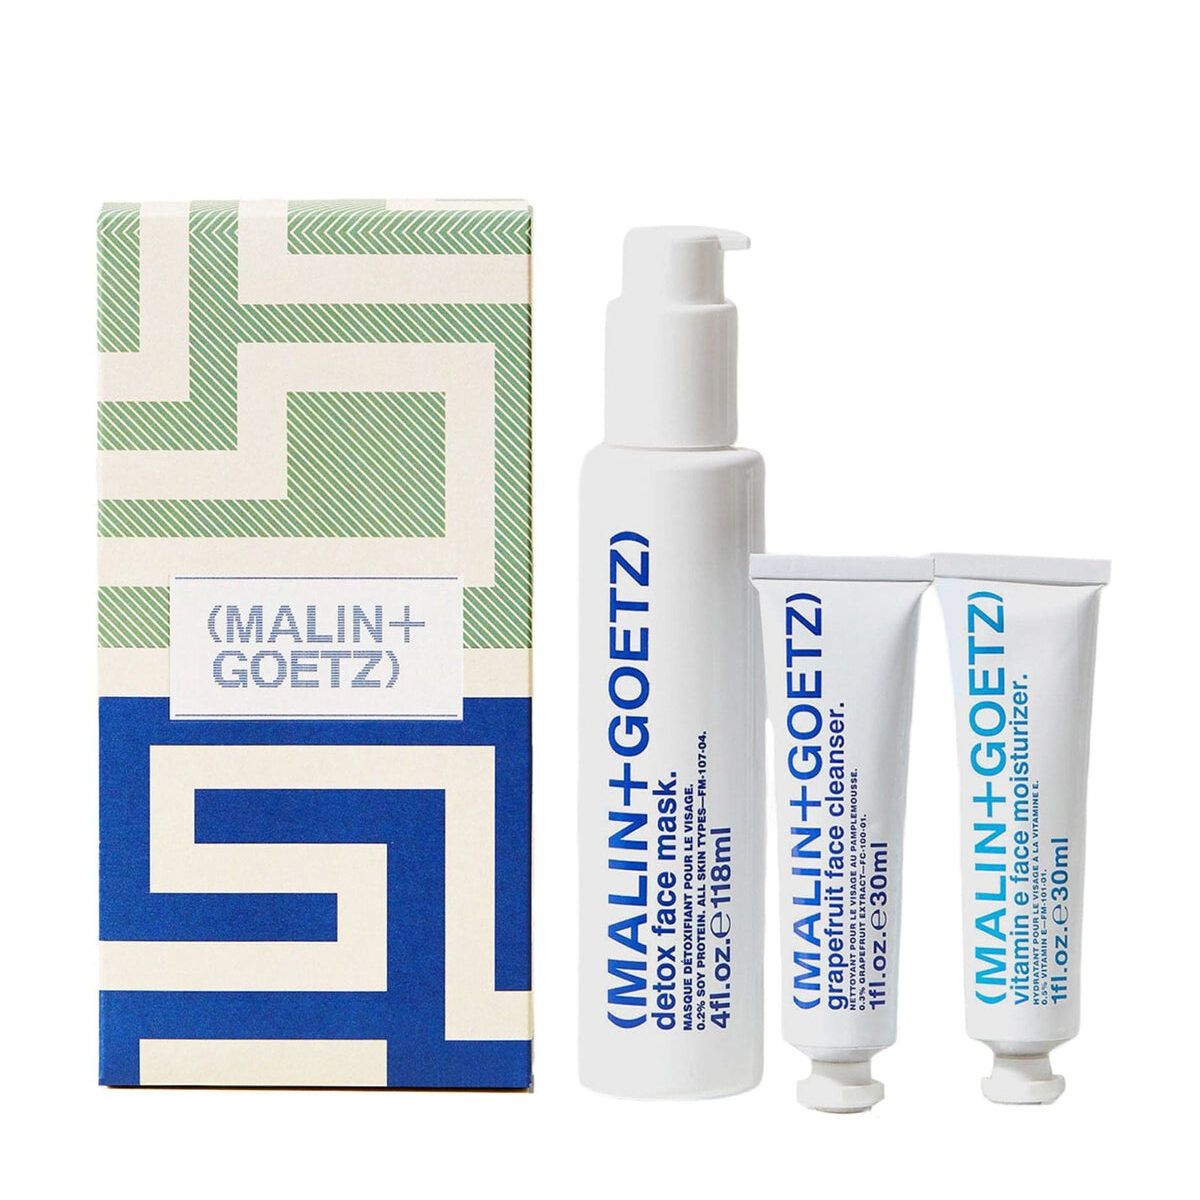 fresh faced starter kit facial Malin+goetz